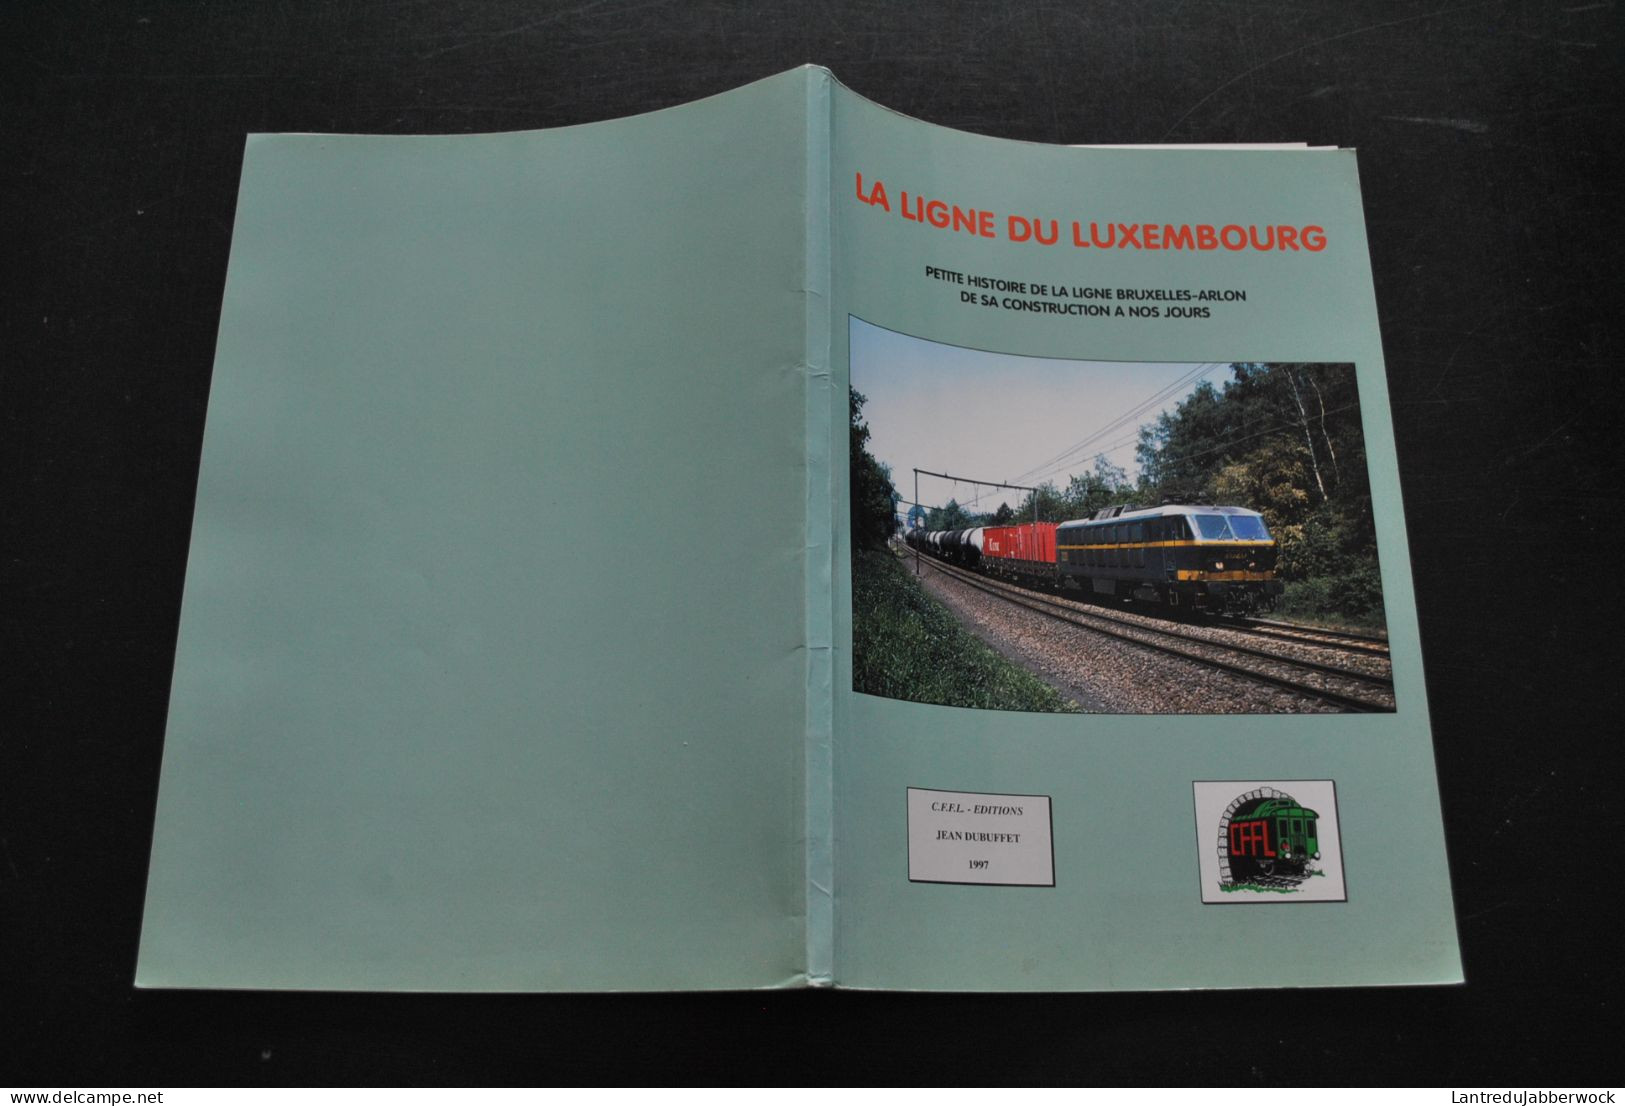 DUBUFFET La Ligne Du Luxembourg Petite Histoire De La Ligne Bruxelles Arlon Rixensart Longlier Marloie Mirwart Marbehan - Bahnwesen & Tramways